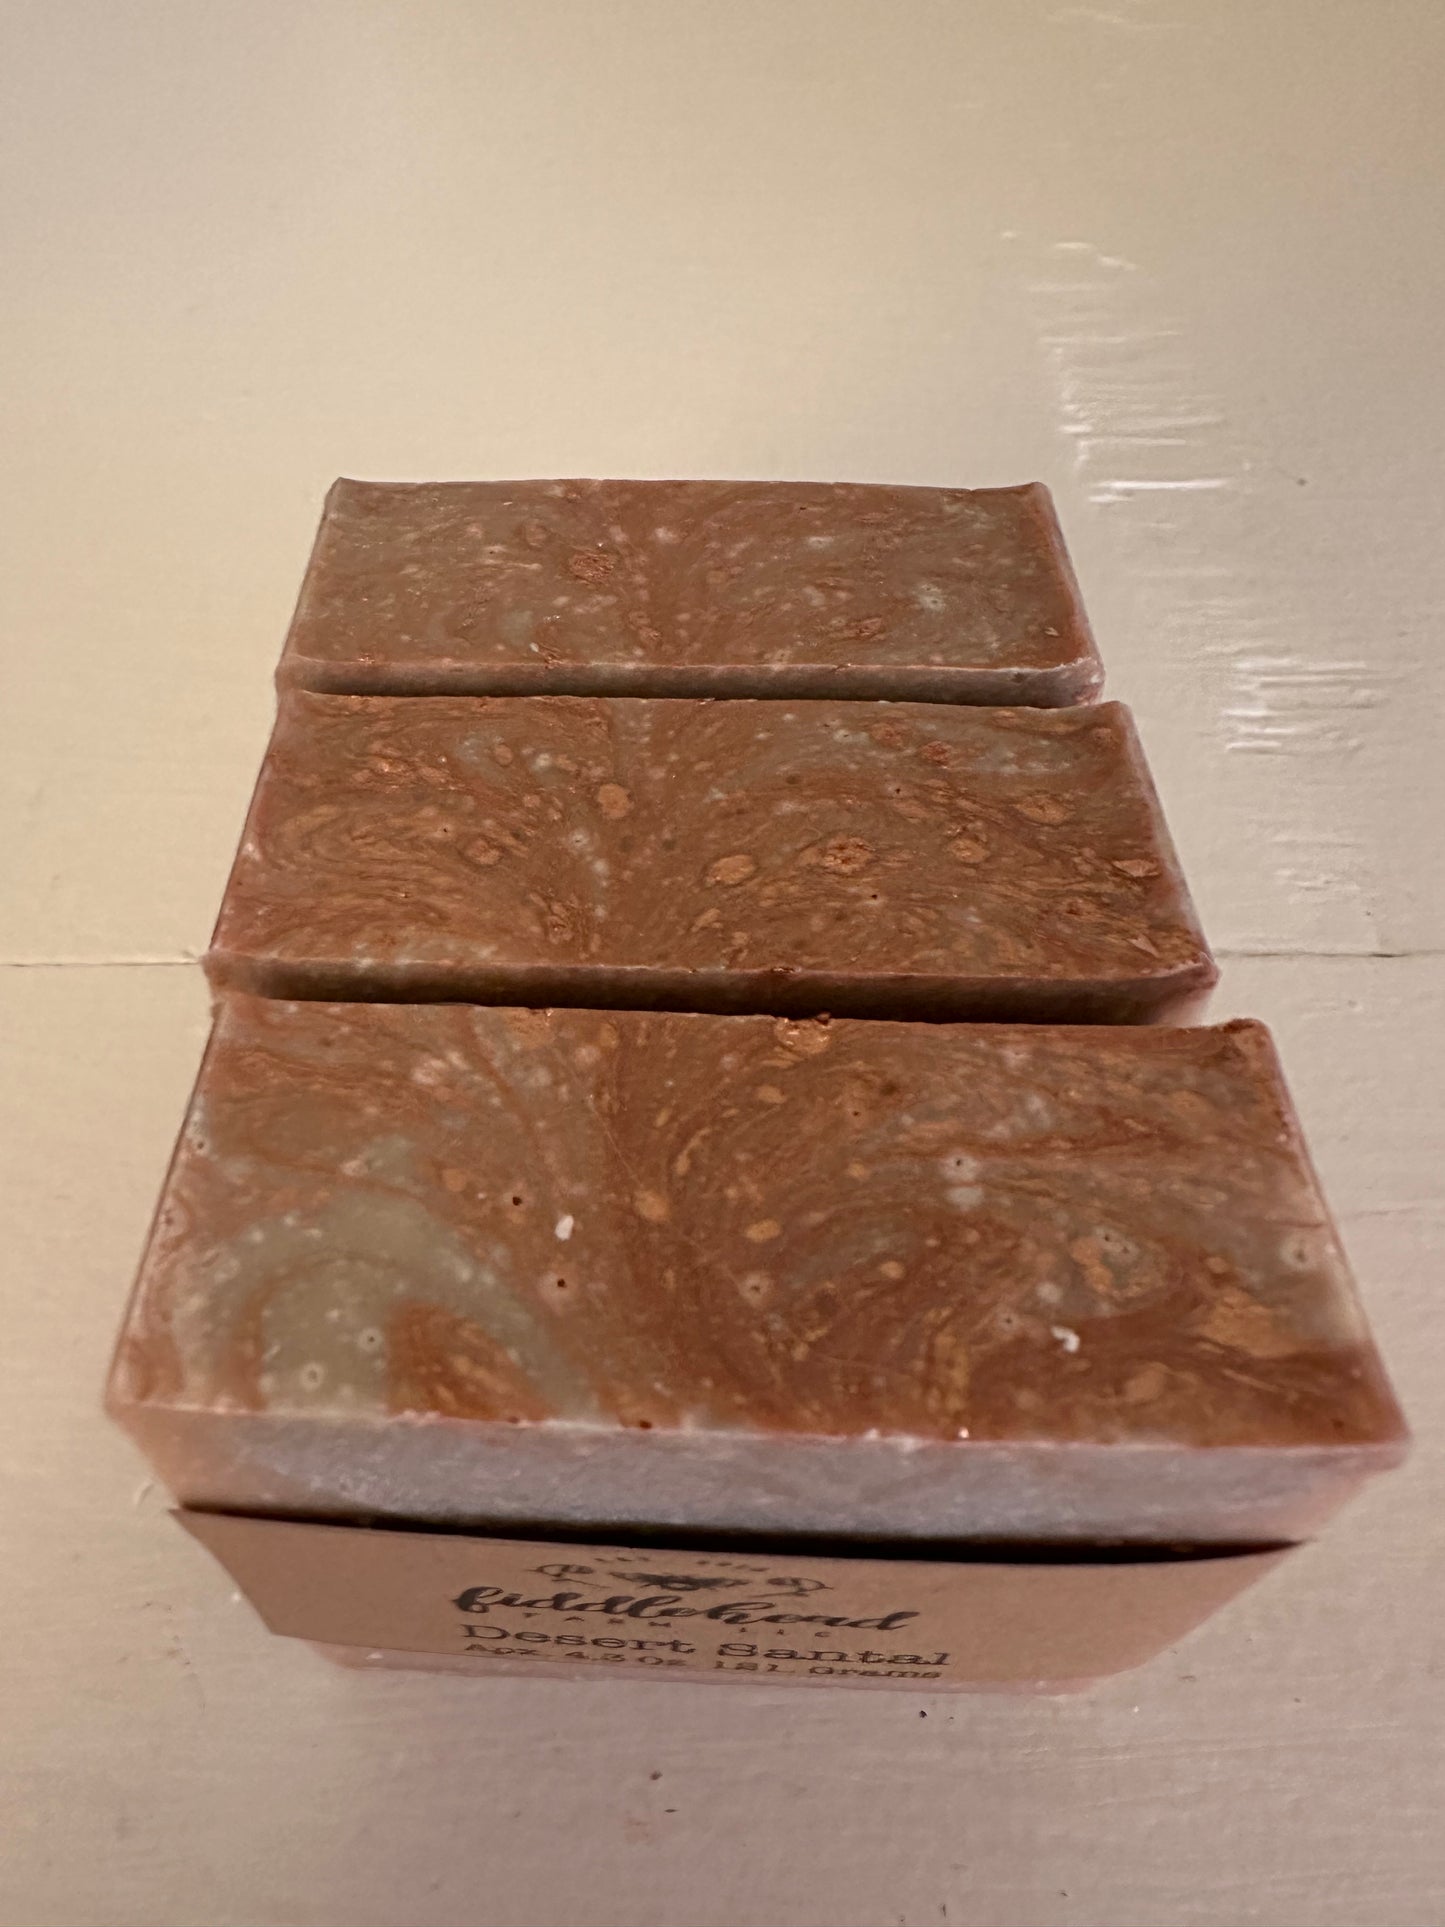 Desert Santal bar soap